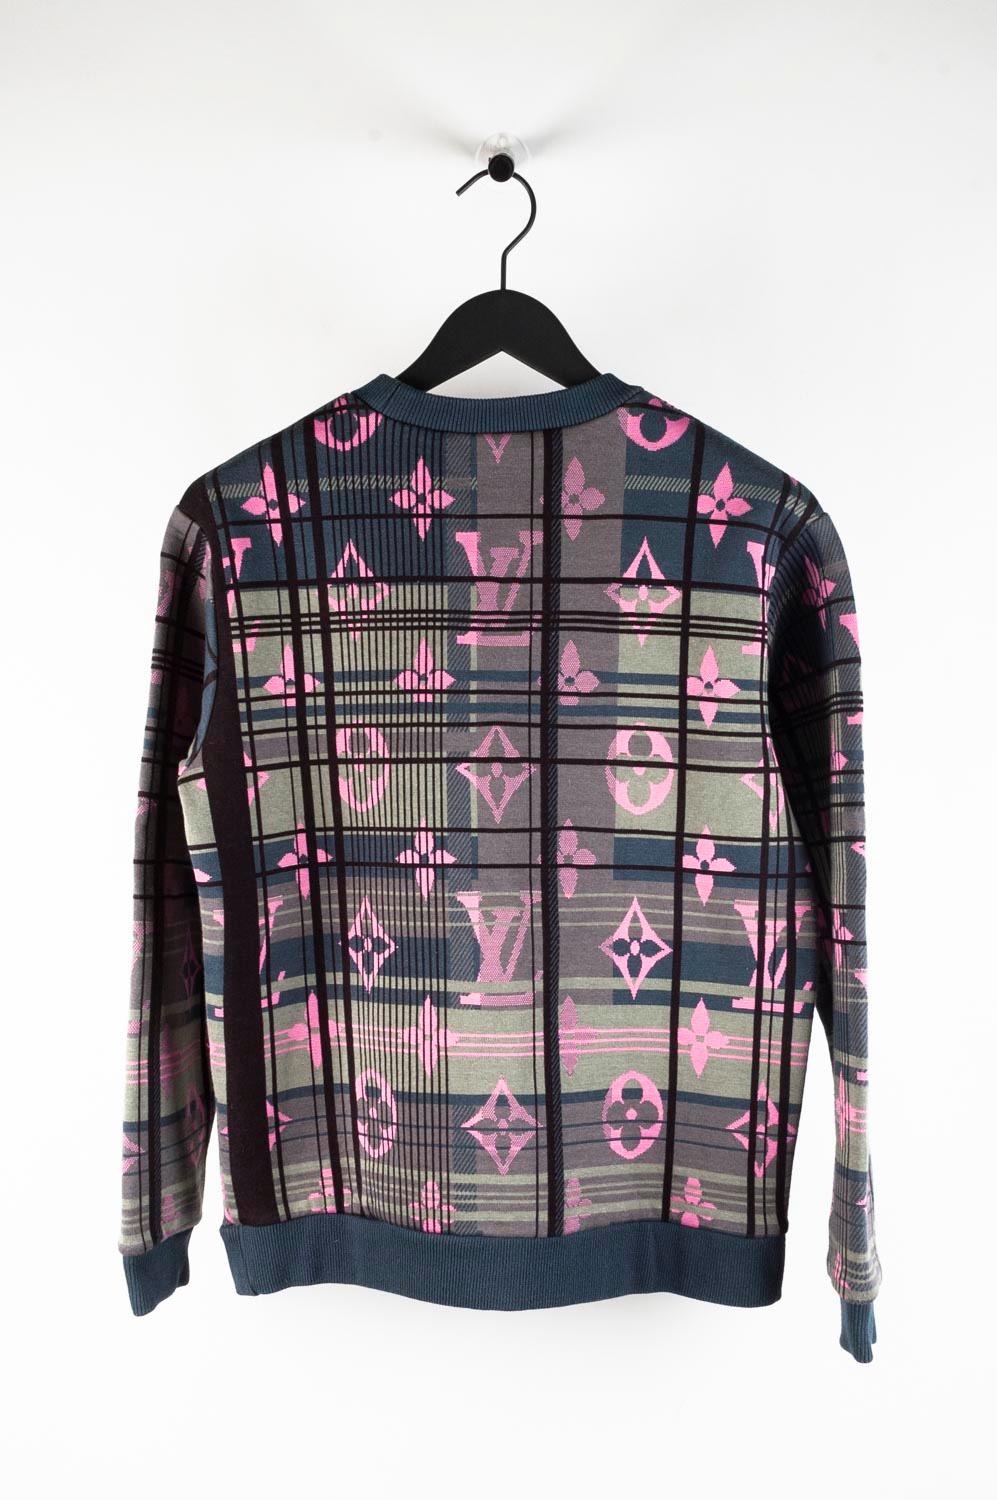 Louis Vuitton Jumper Men Sweatshirt Top Size M S521 1